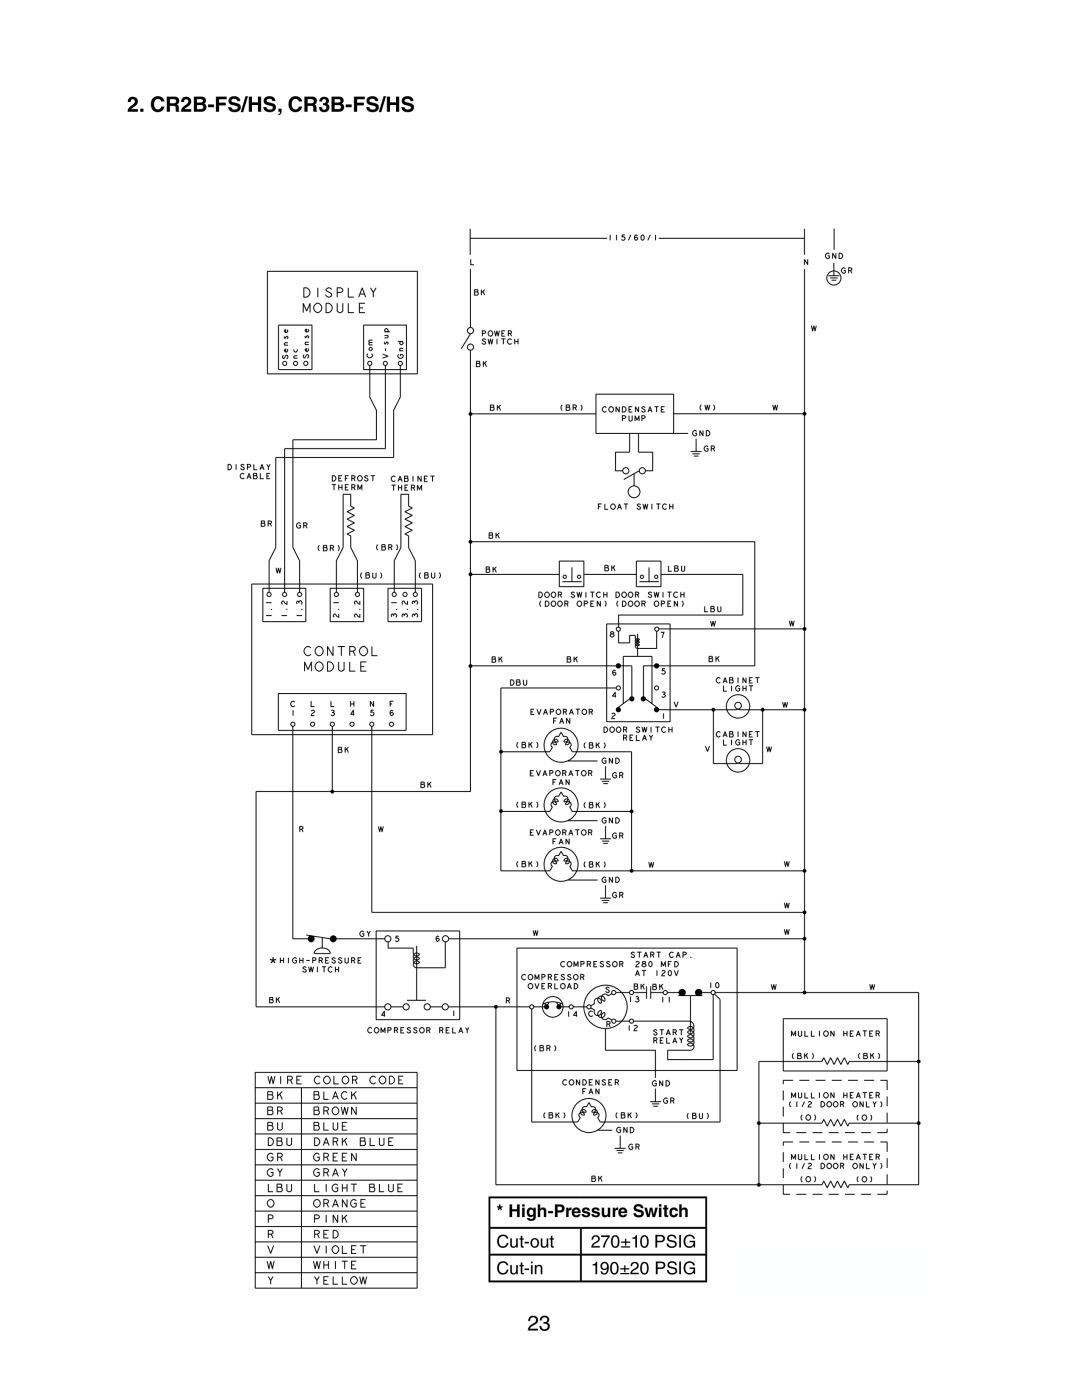 Hoshizaki 73183 service manual 2. CR2B-FS/HS, CR3B-FS/HS, High-Pressure Switch 